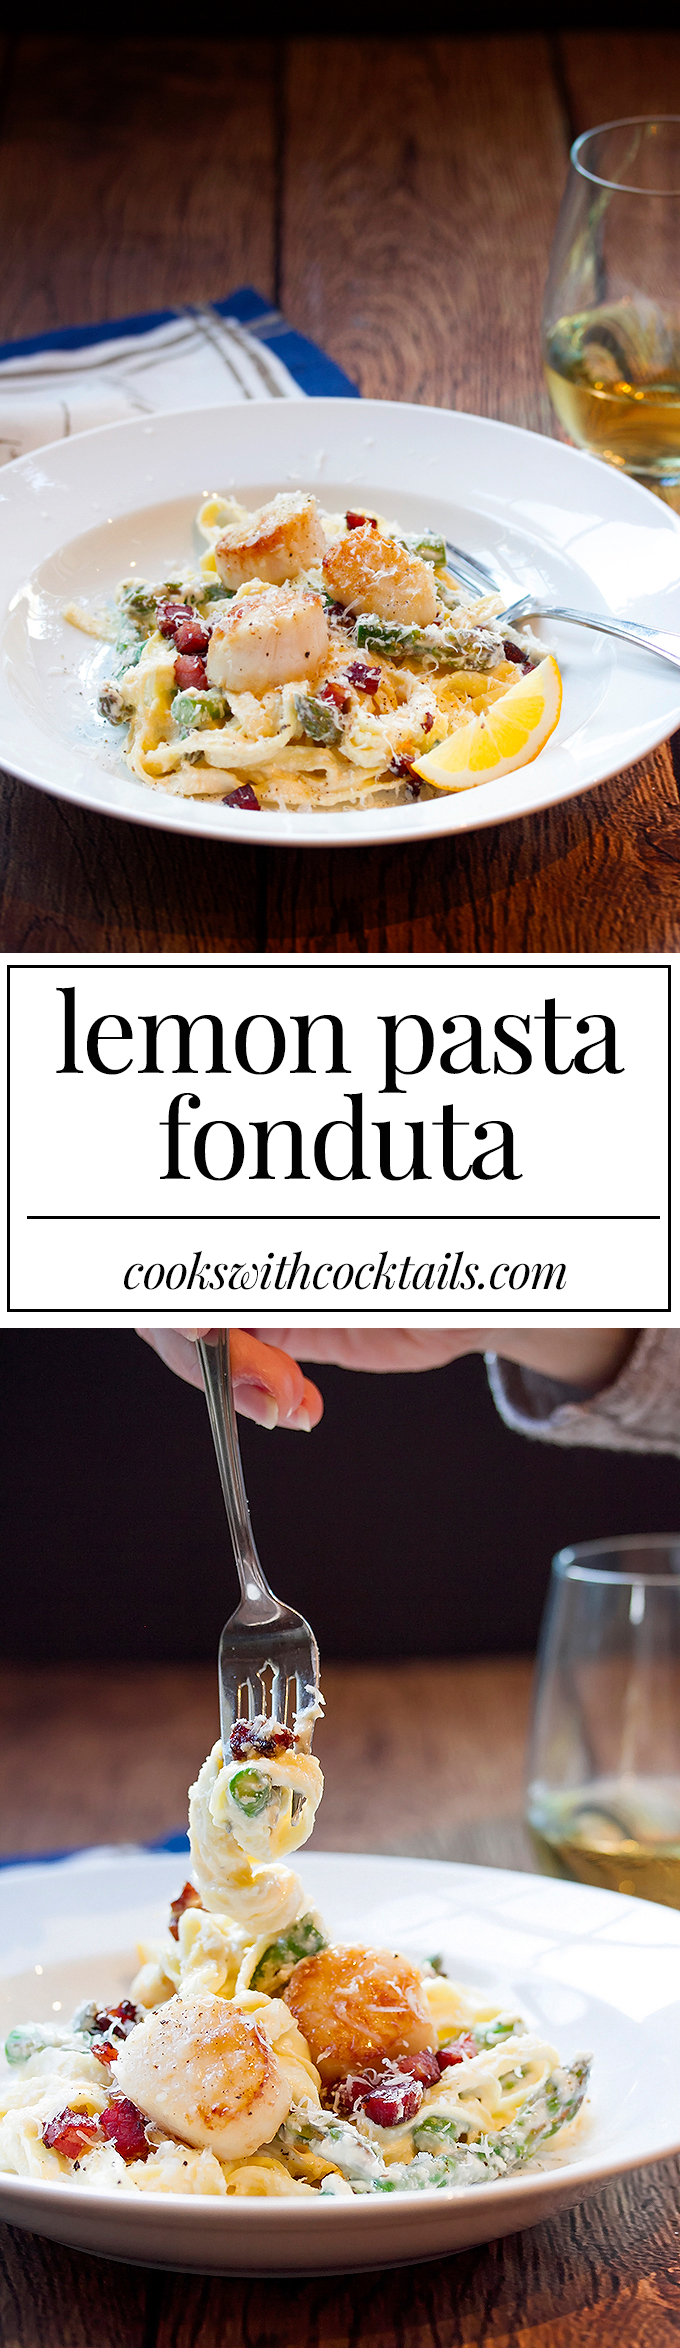 Asparagus & Meyer Lemon Pasta Fonduta with Pan Fried Scallops